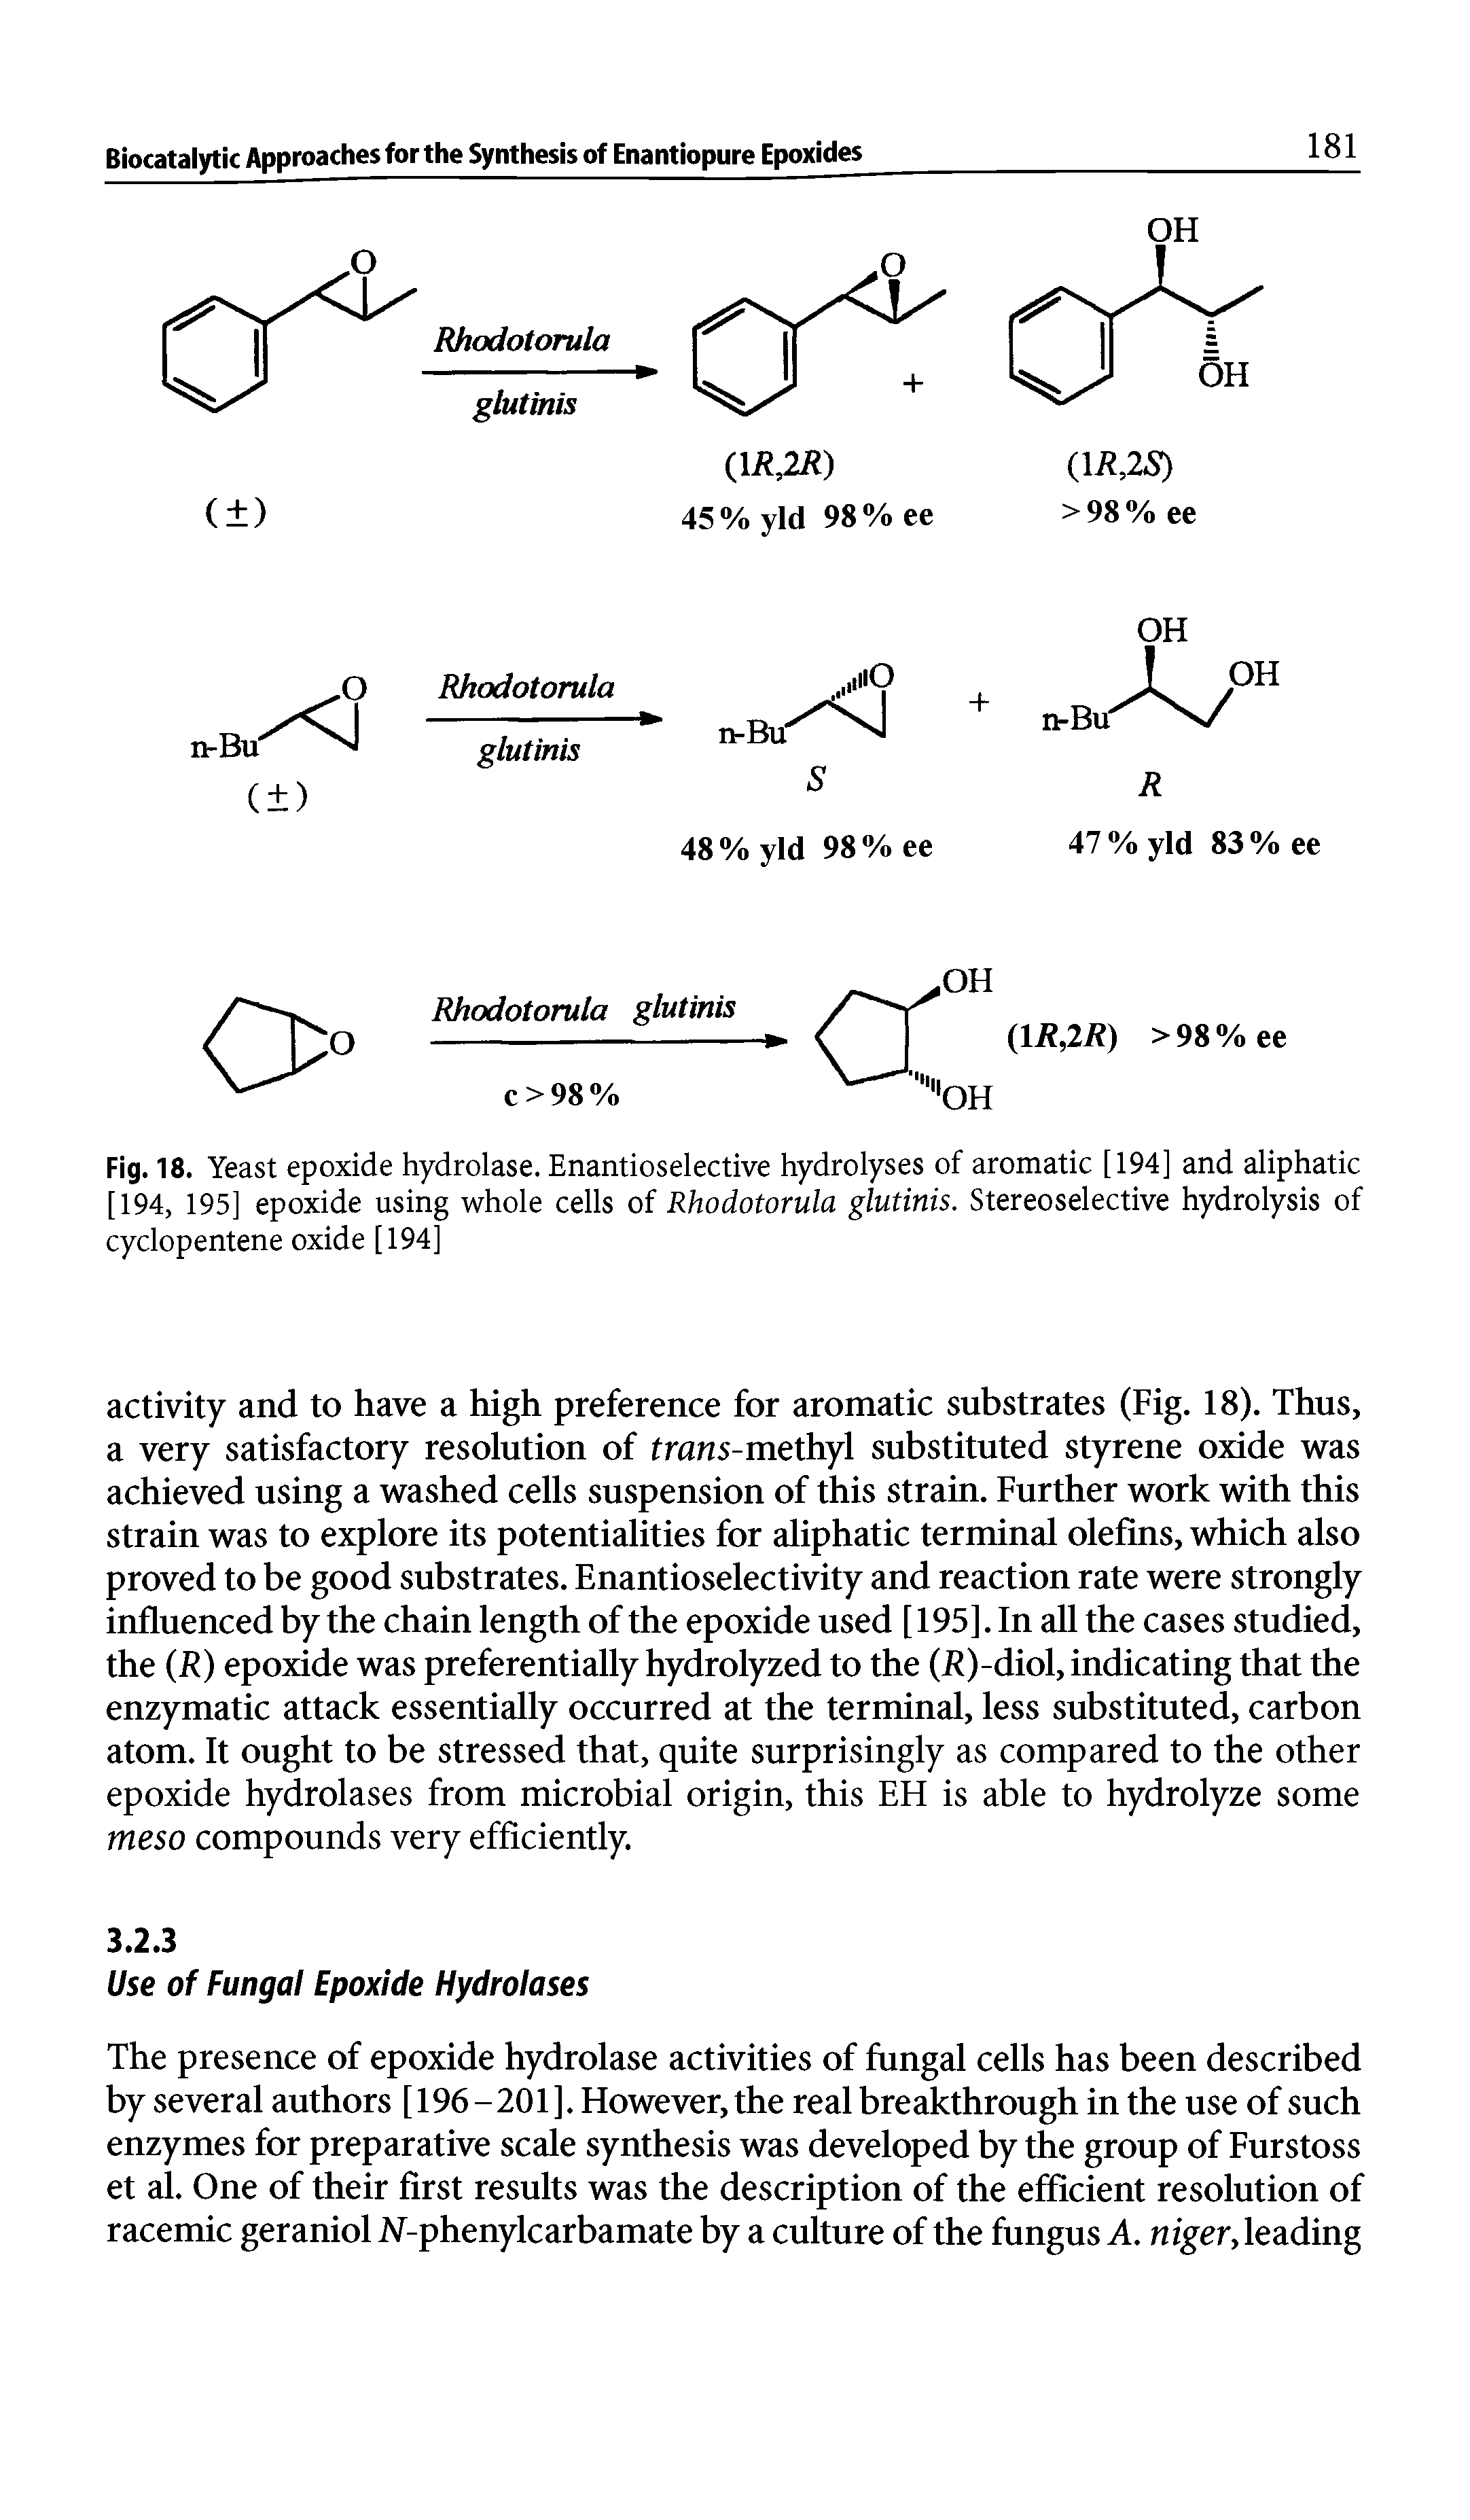 Fig. 18. Yeast epoxide hydrolase. Enantioselective hydrolyses of aromatic [194] and aliphatic [194, 195] epoxide using whole cells of Rhodotorula glutinis. Stereoselective hydrolysis of cyclopentene oxide [194]...